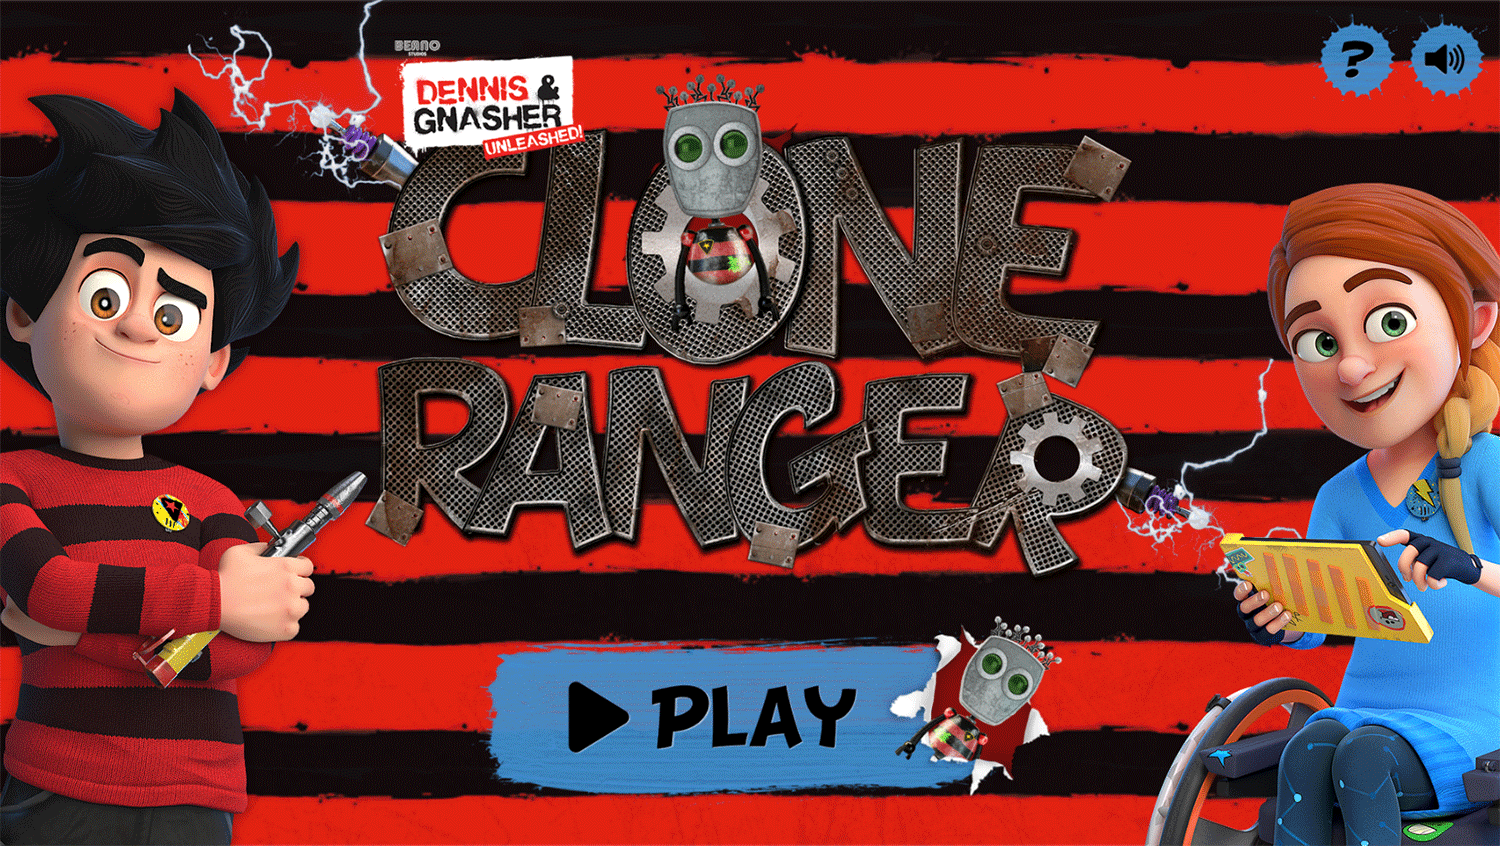 Dennis & Gnasher Clone Ranger Game Welcome Screen Screenshot.